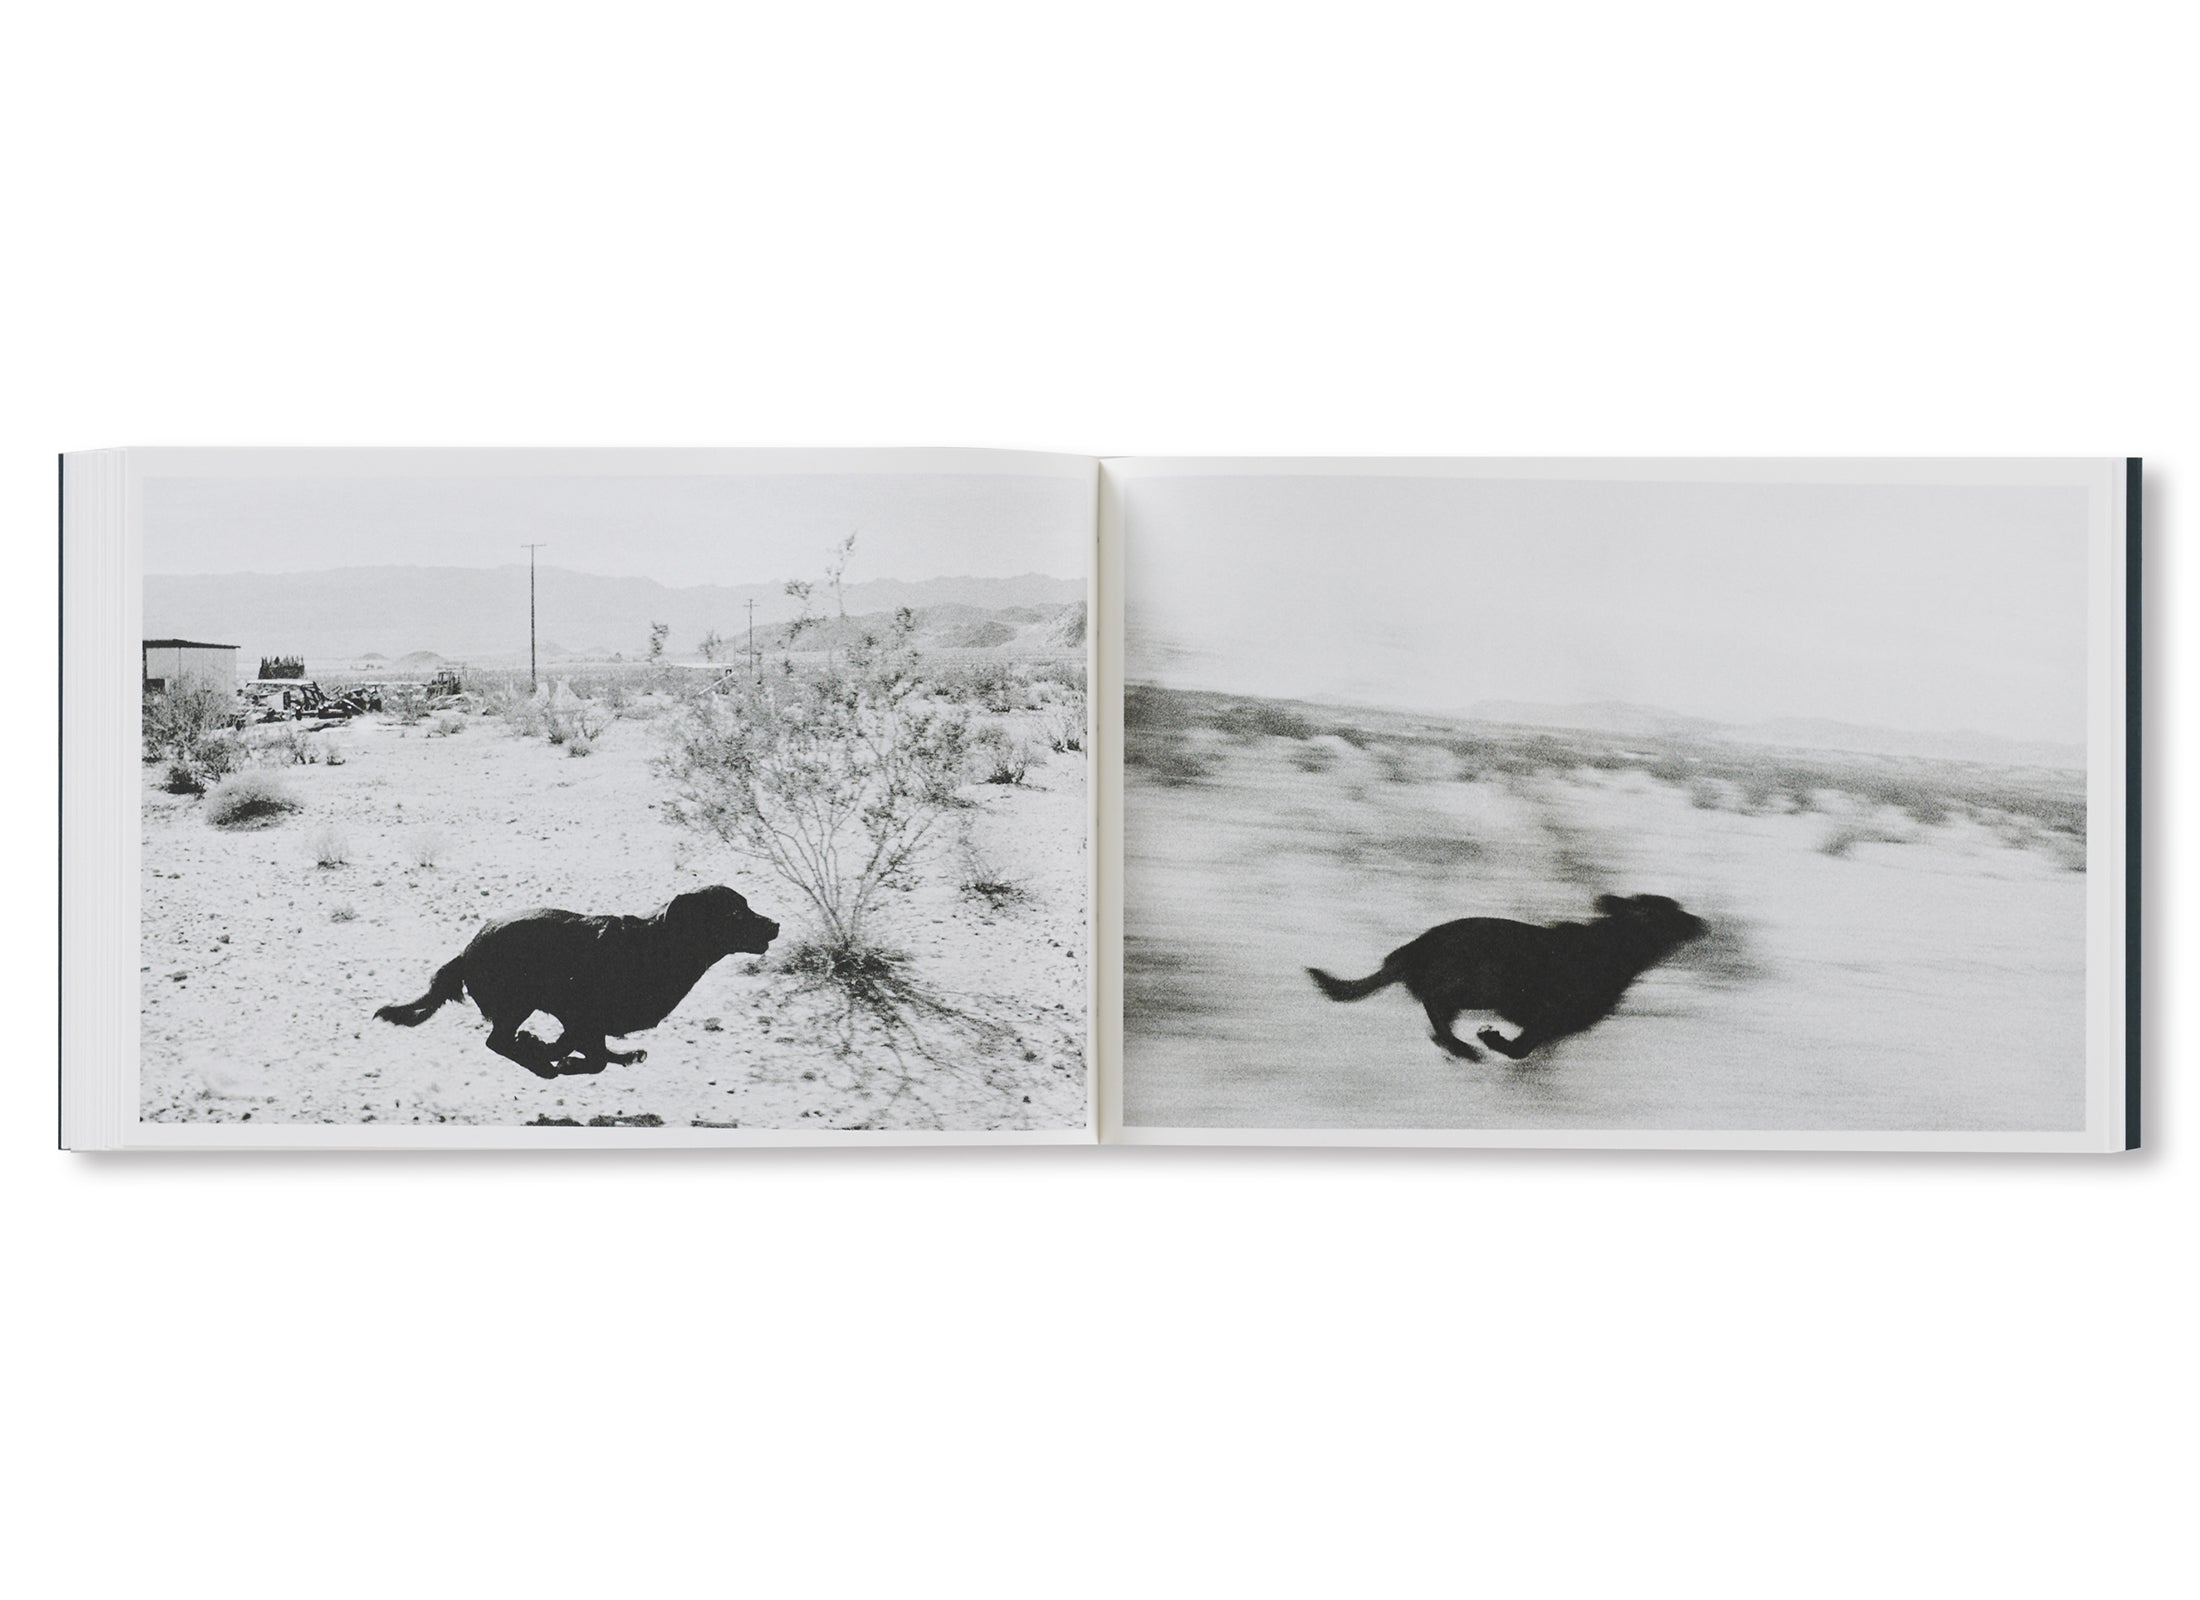 PICTURES FROM MOVING CARS by Joel Meyerowitz, Daido Moriyama, John Divola